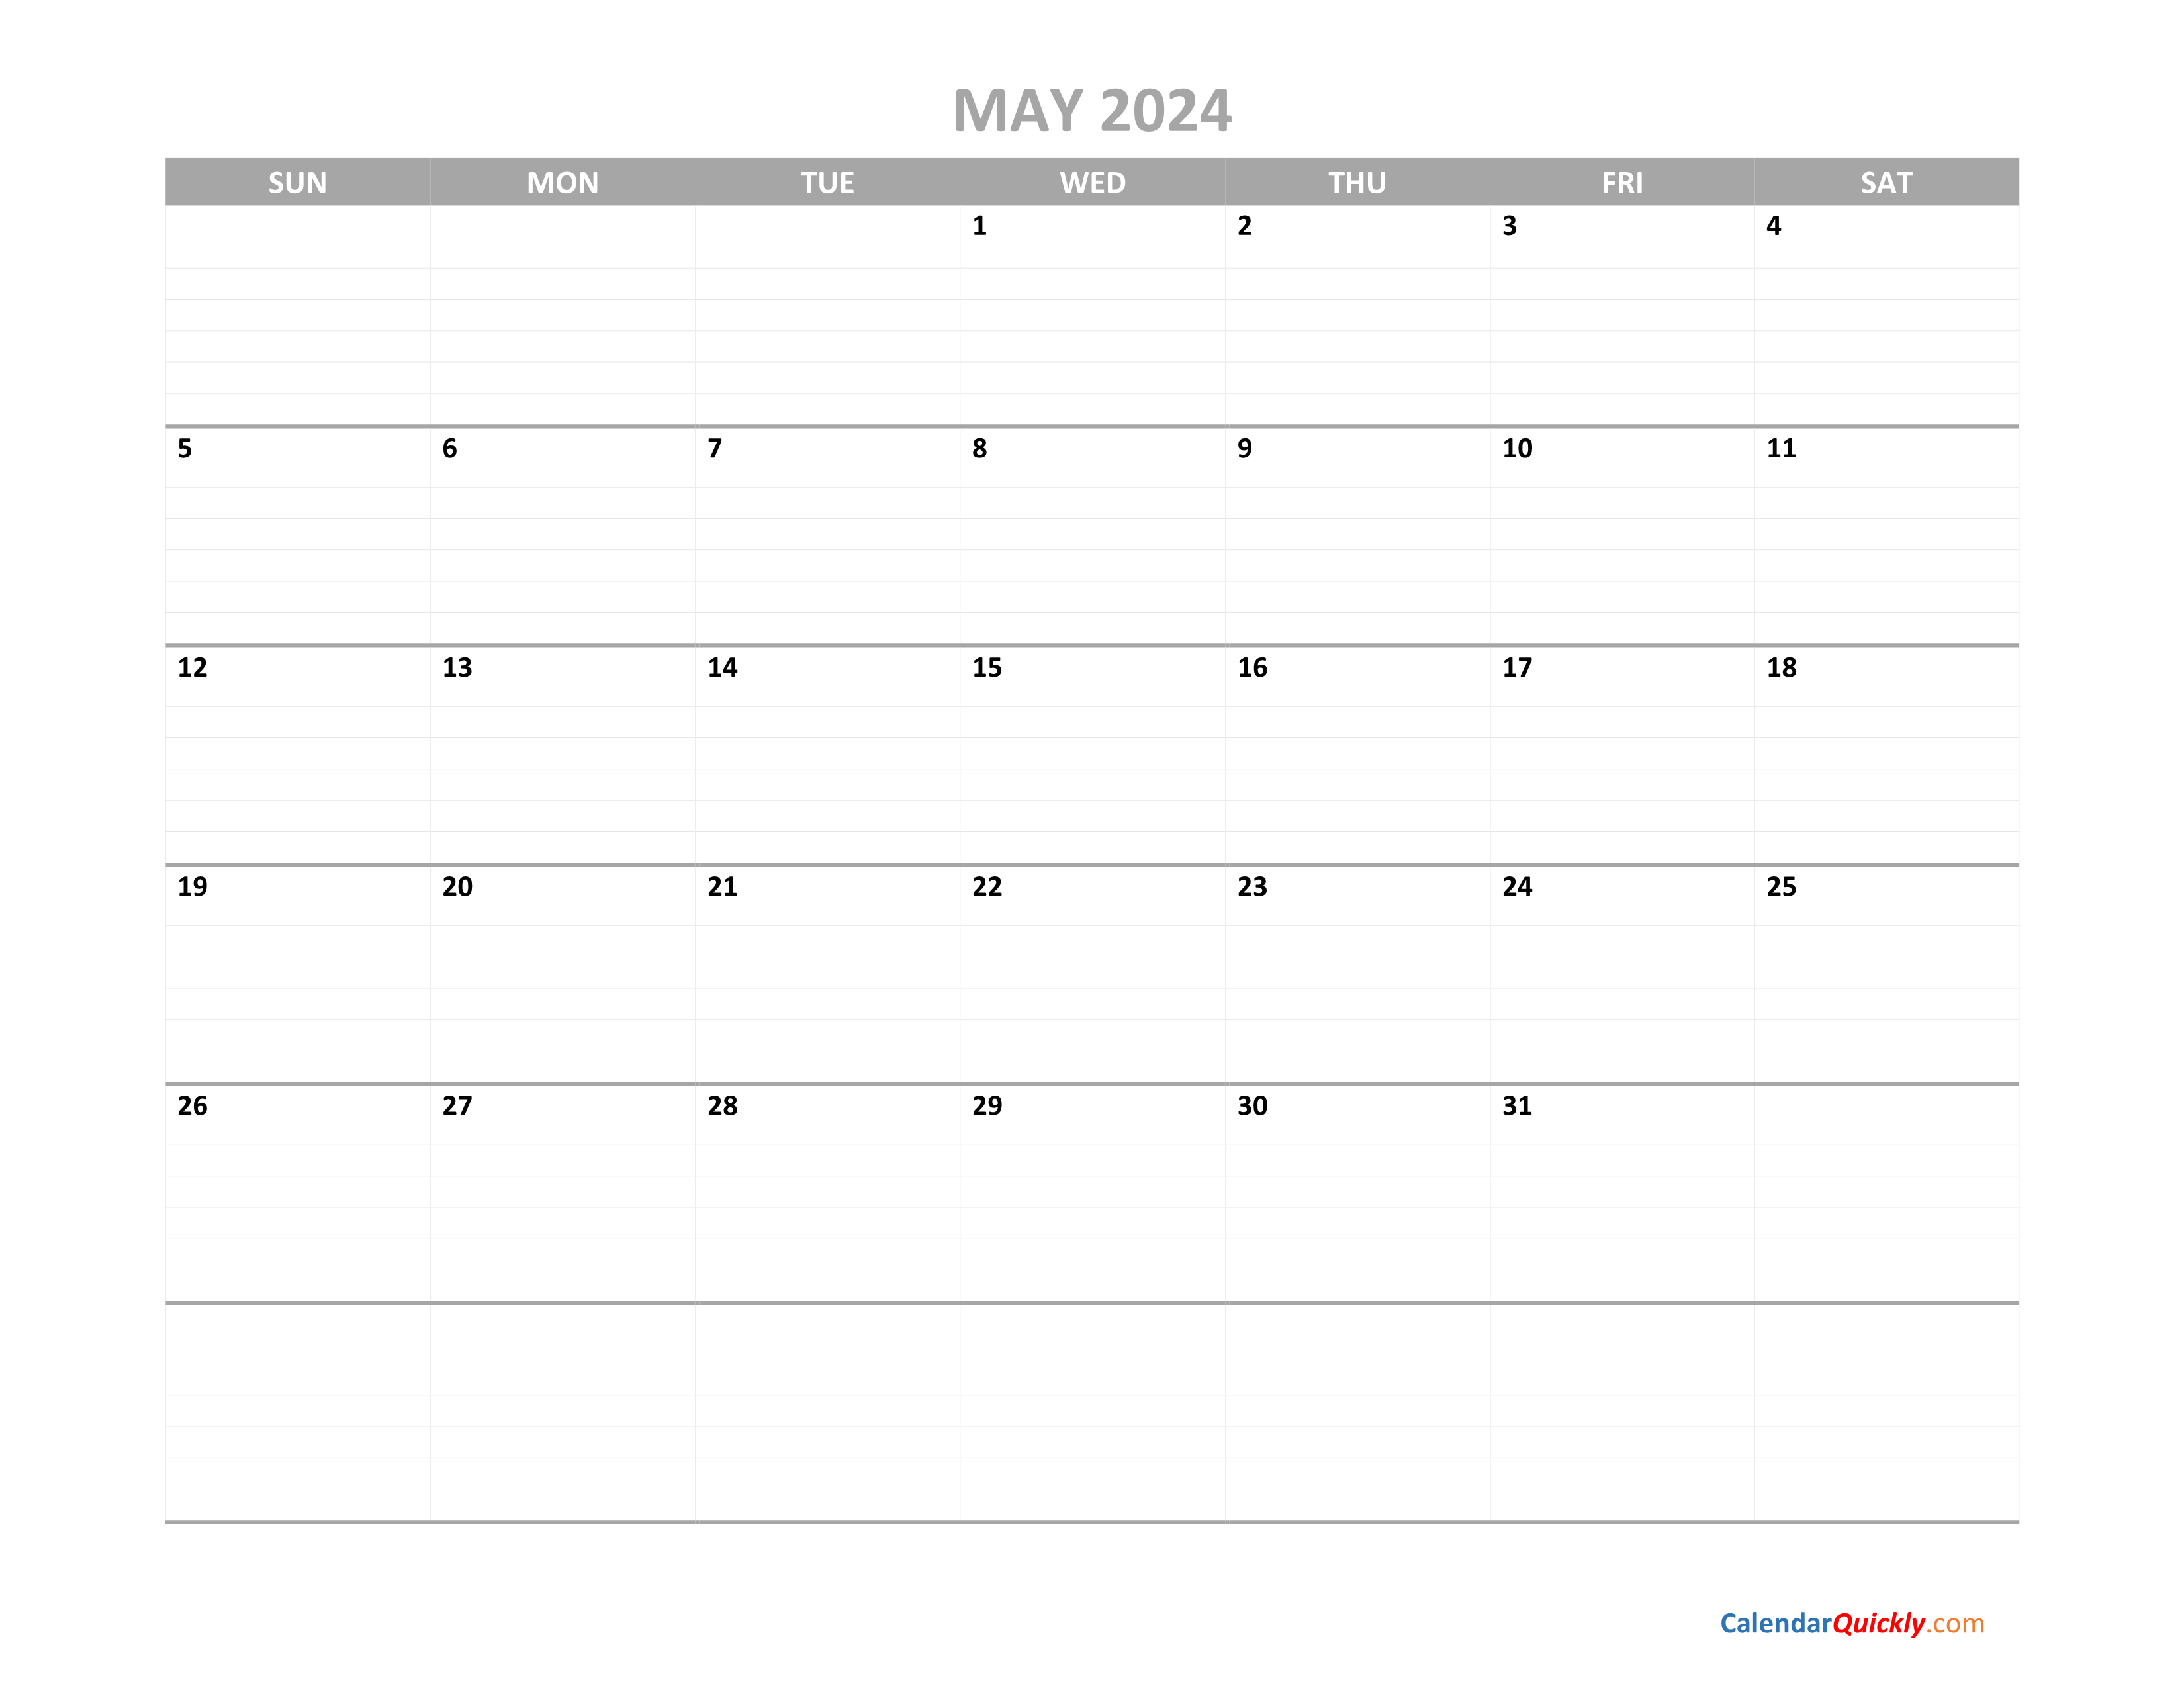 Syracuse University Calendar 2024 May Calendar 2024 - Vrogue